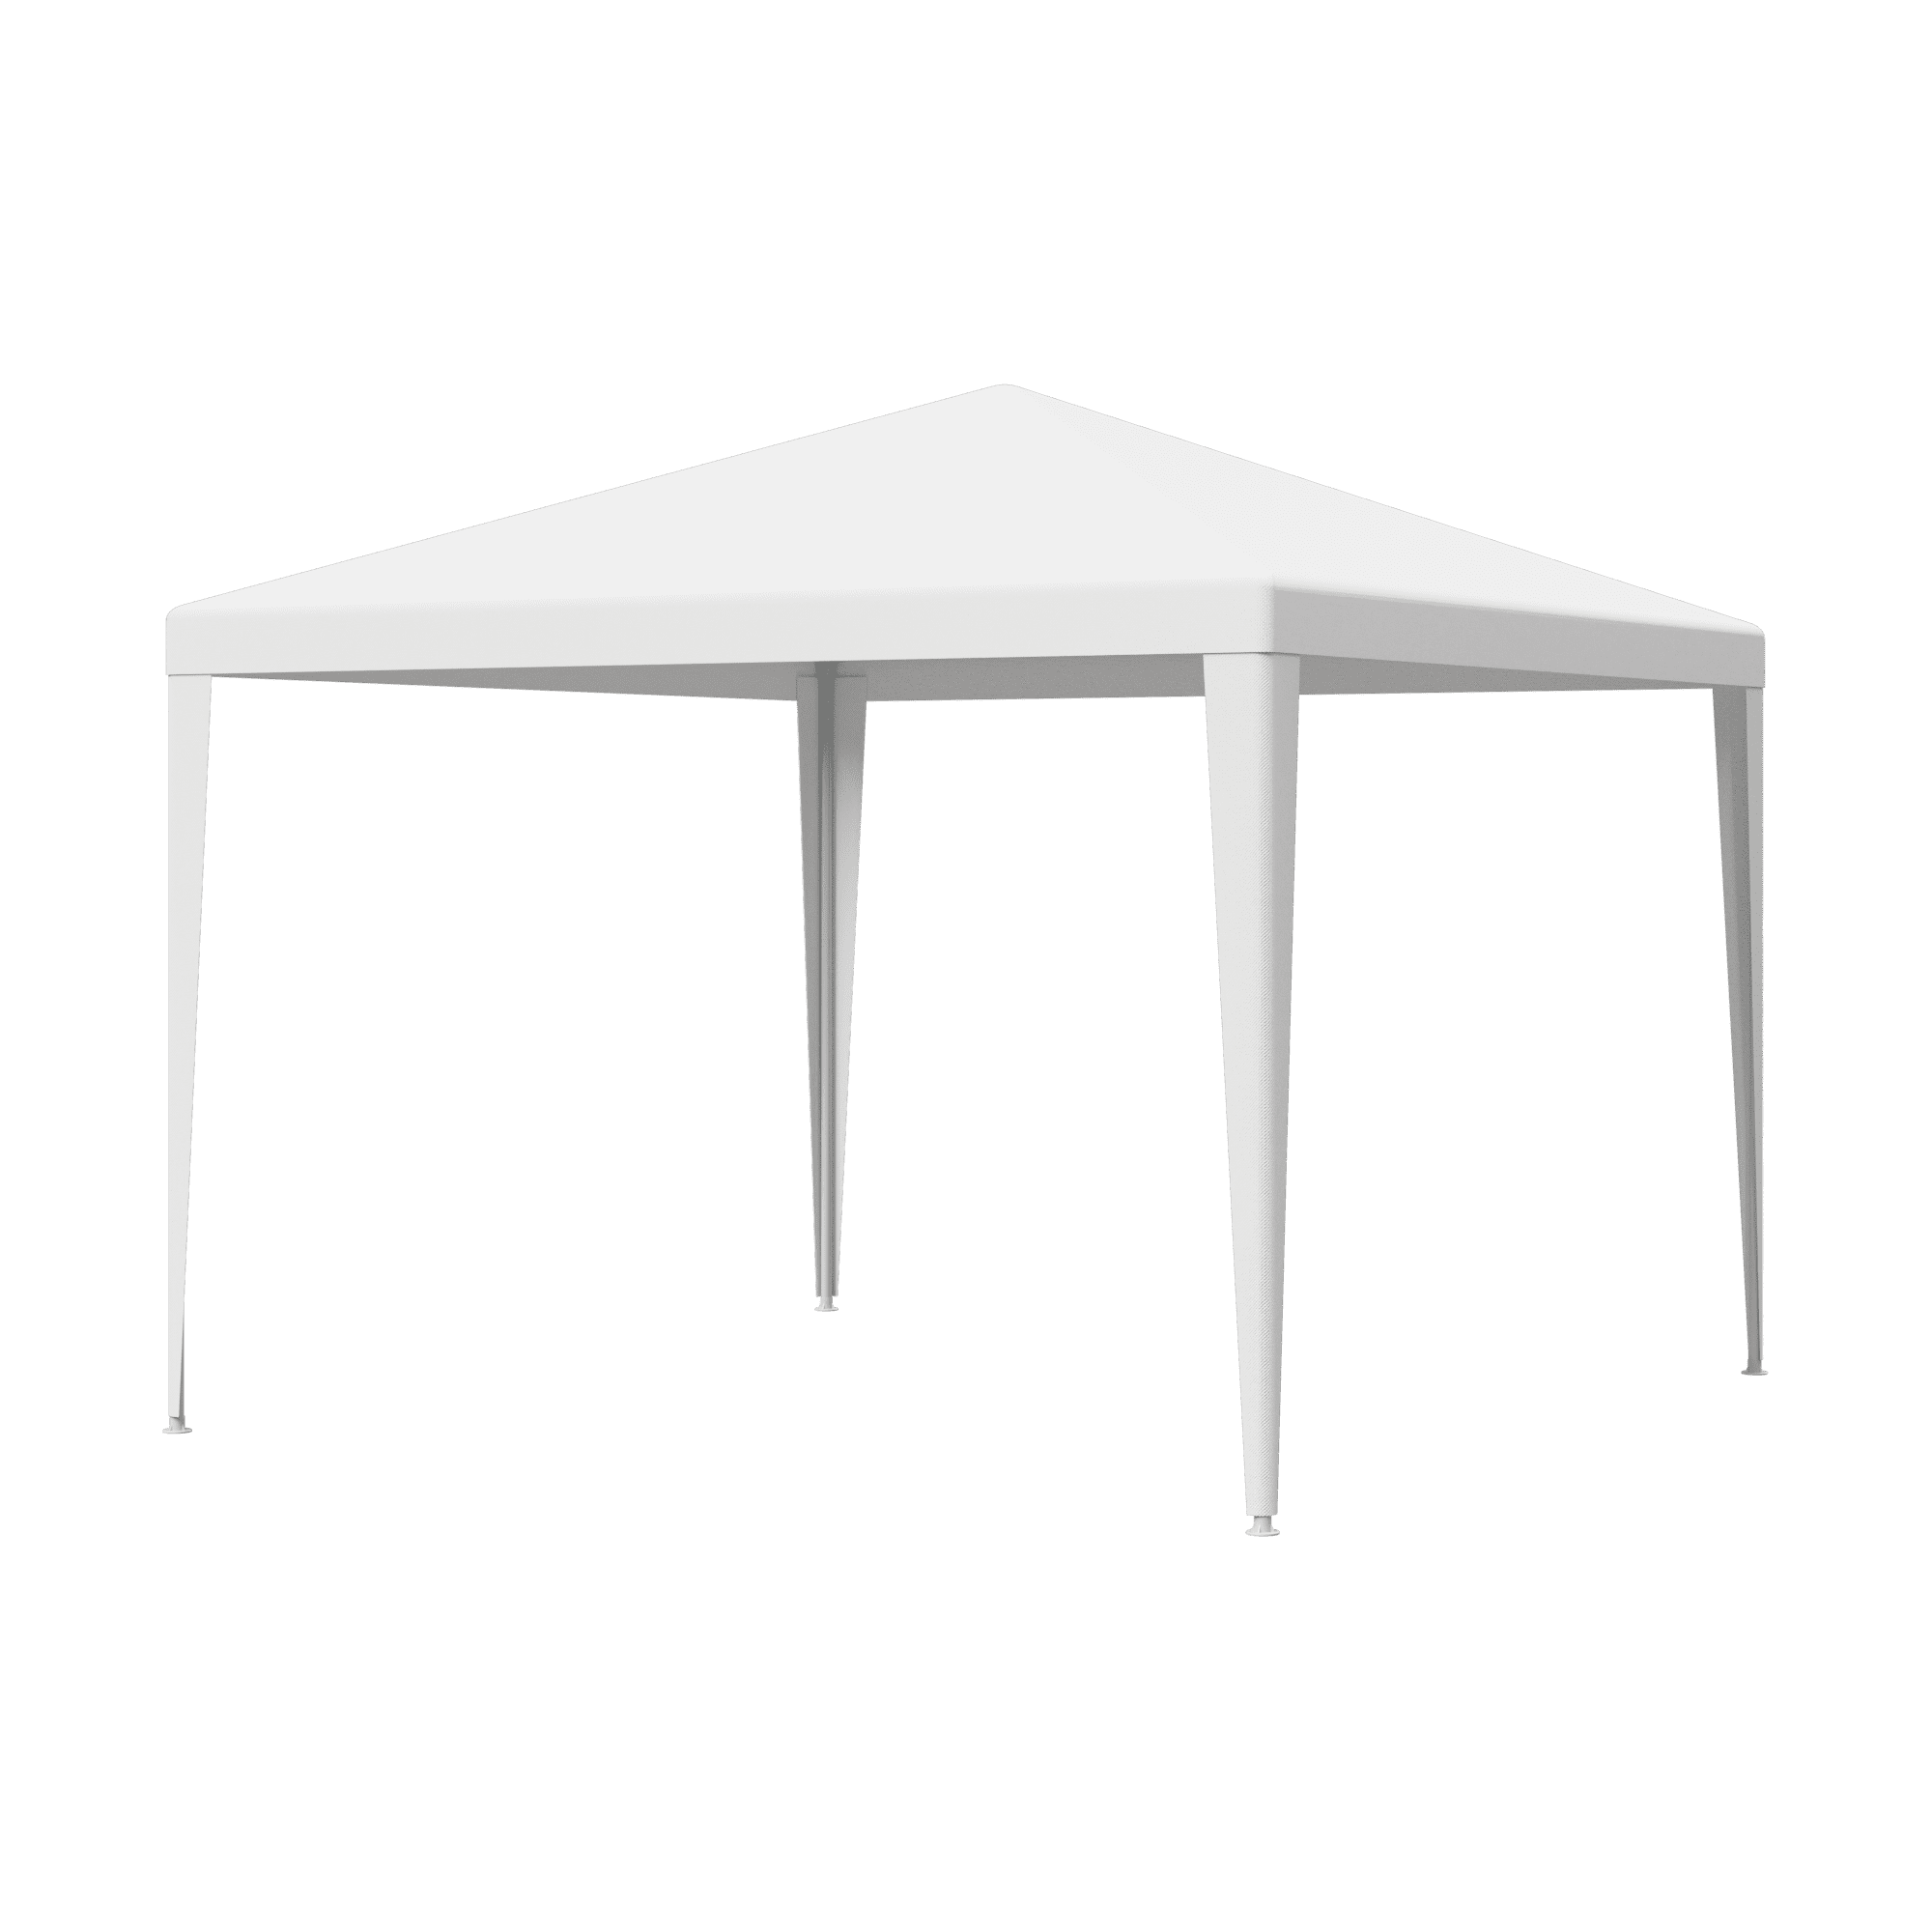 ZENSTYLE Patio Wedding Party Tent Set White Waterproof Canopy - 10 x 10'